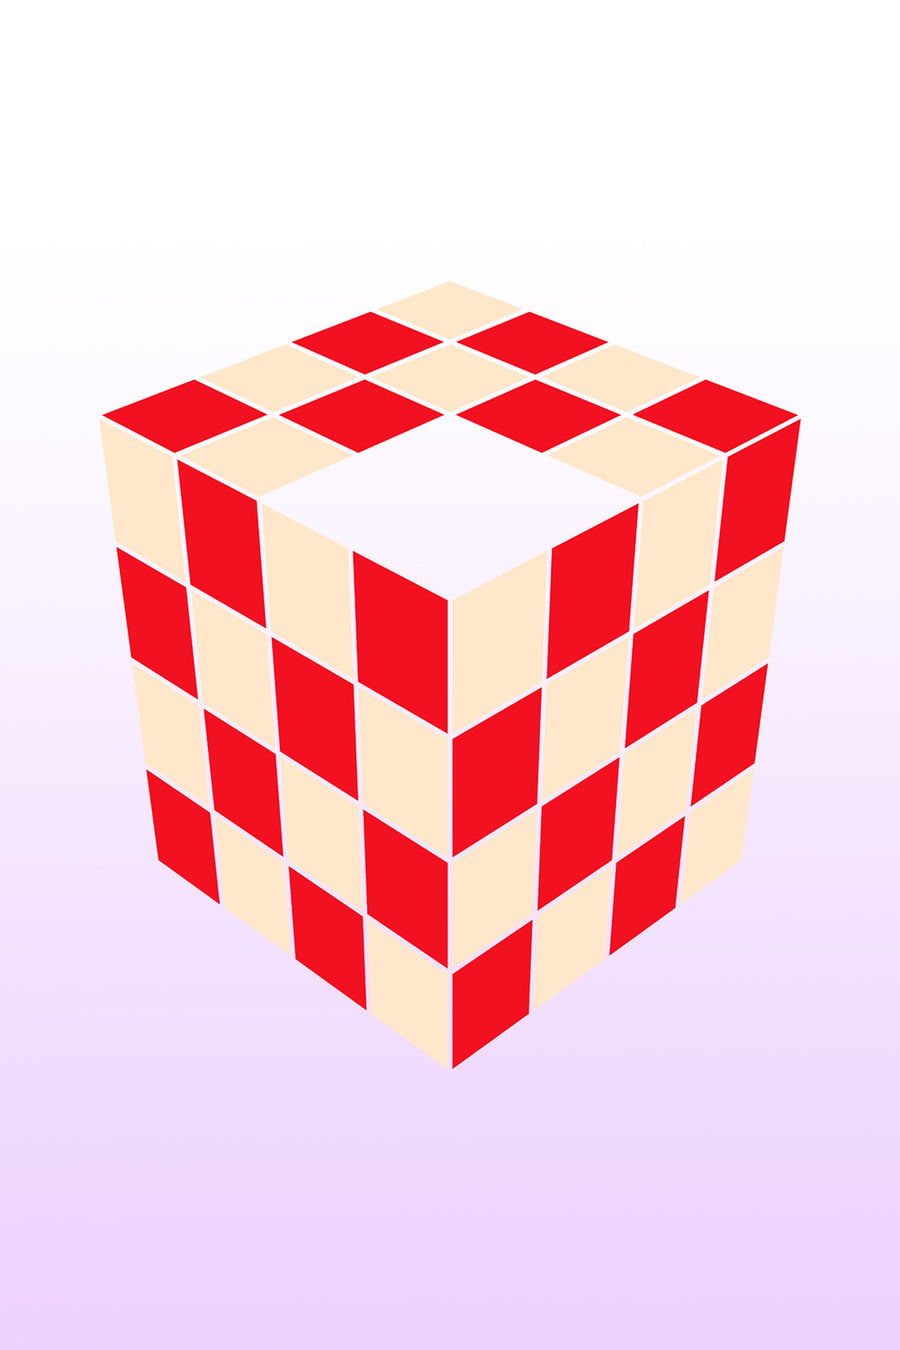 Tiled Cube 2